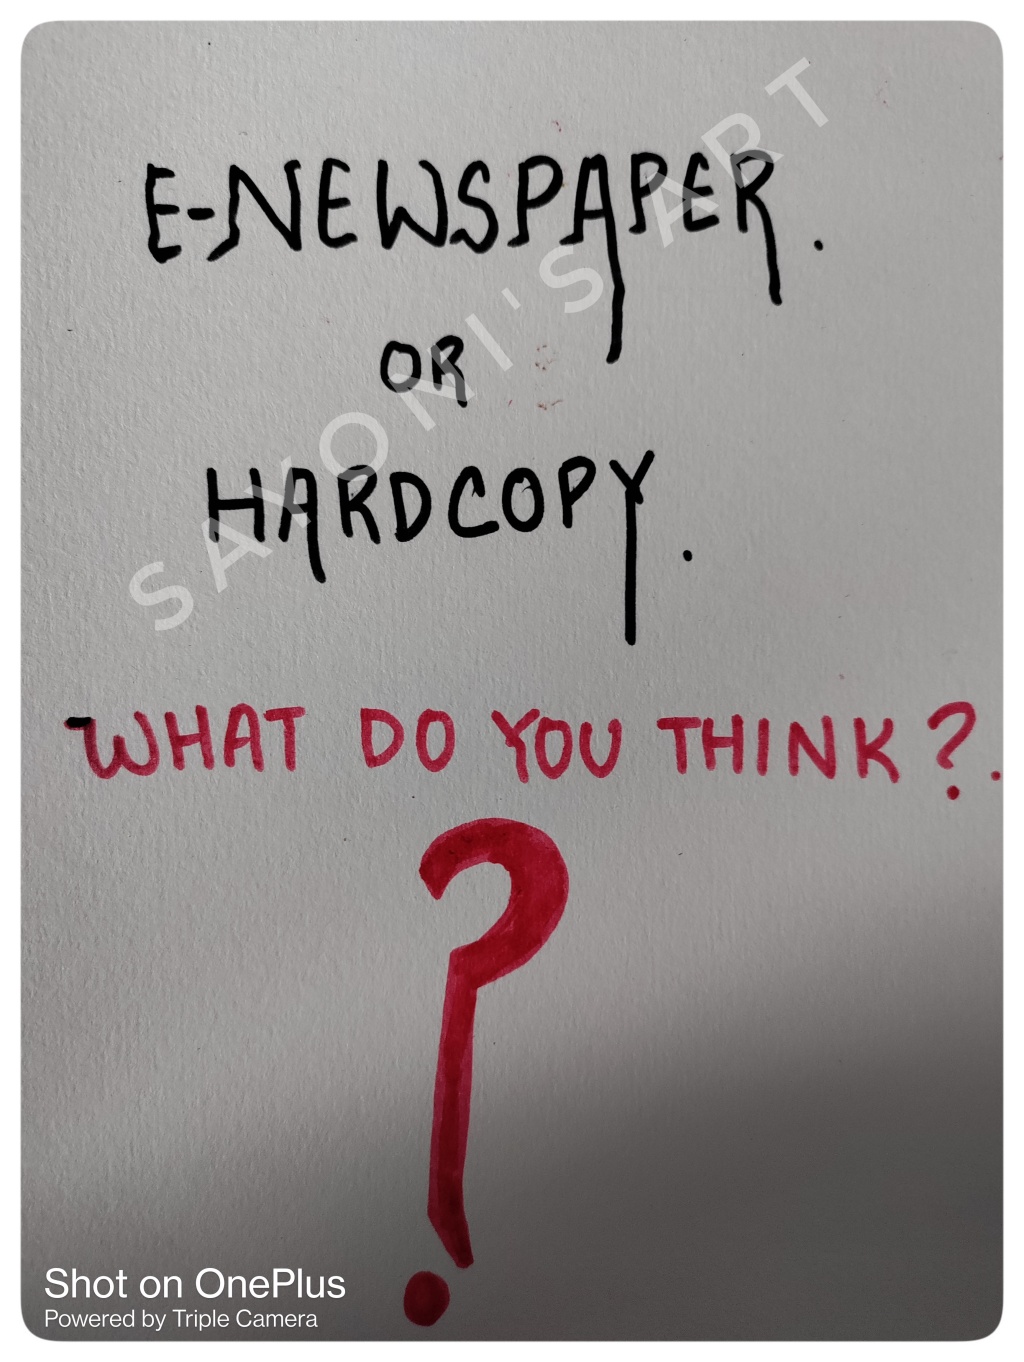 E – newspaper or hardcopy: A Debate